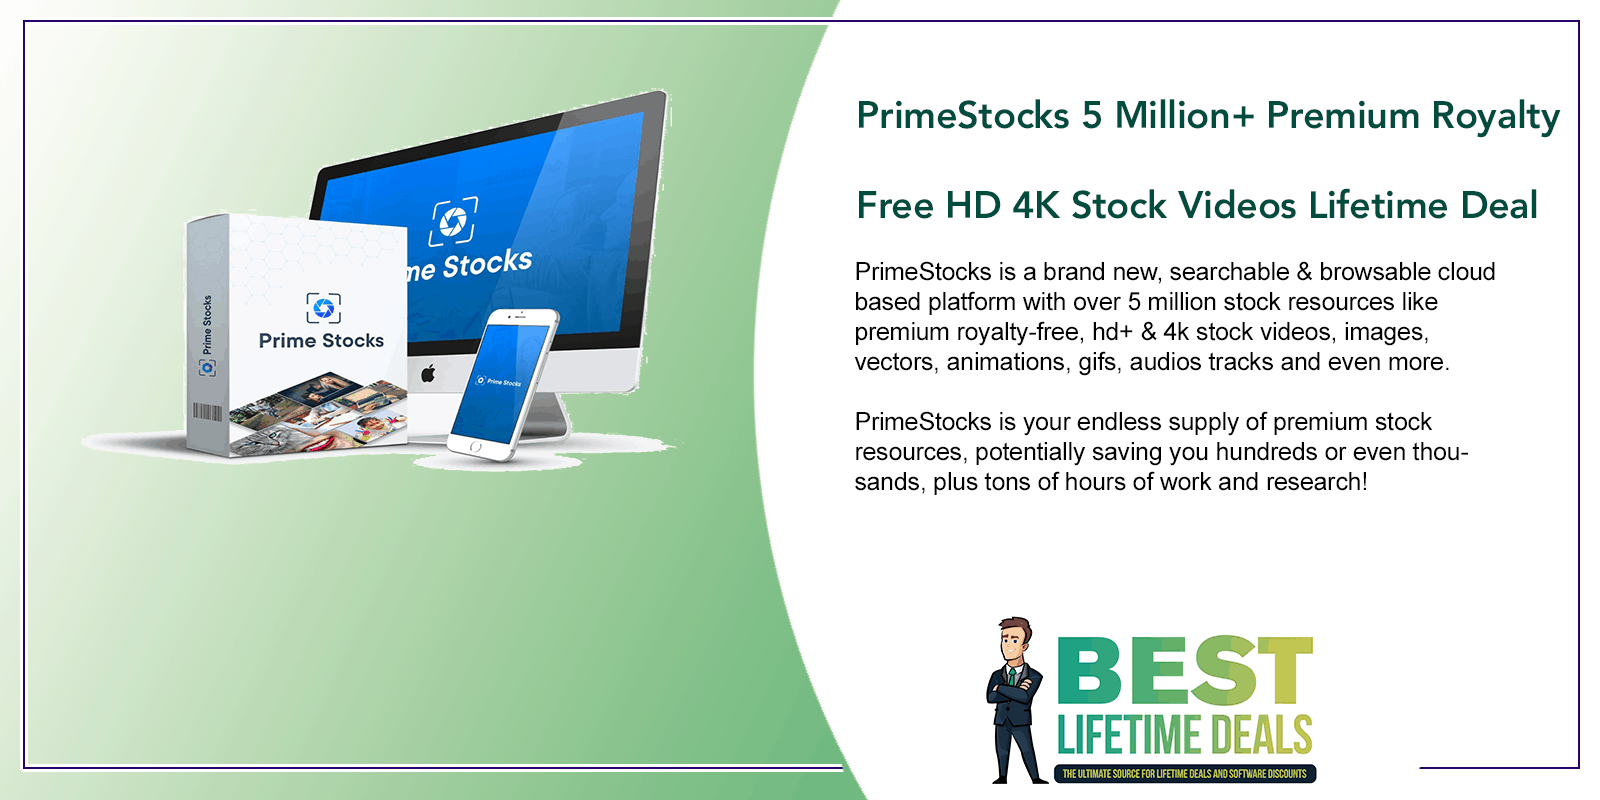 PrimeStocks 5 Million Premium Royalty Free HD 4K Stock Videos Featured Image